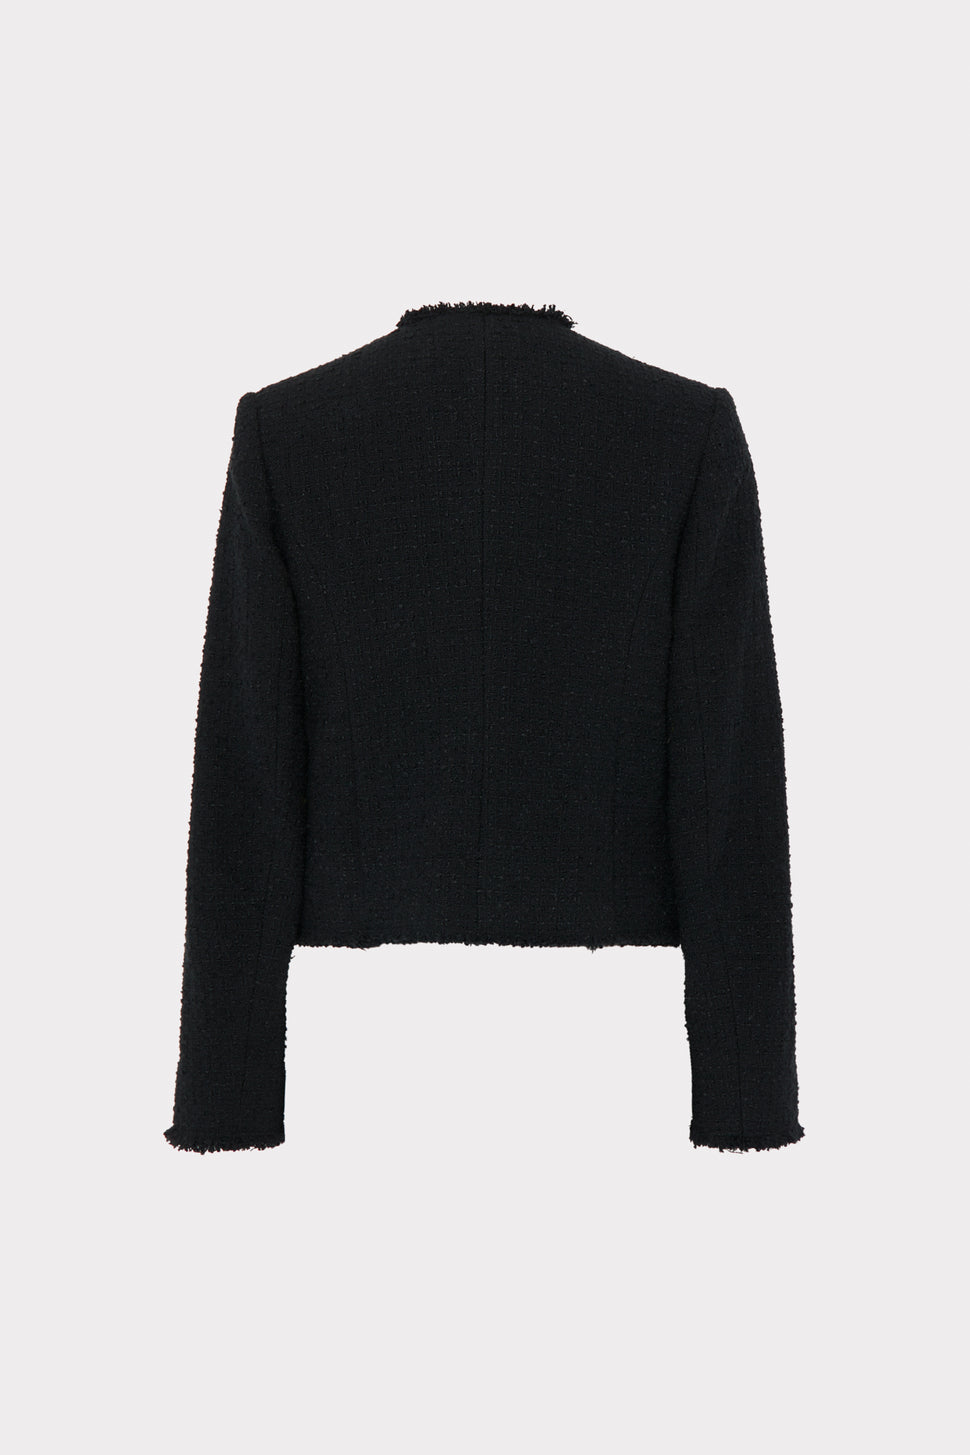 Chanel, Black and white boucle knit maxi gown - Unique Designer Pieces